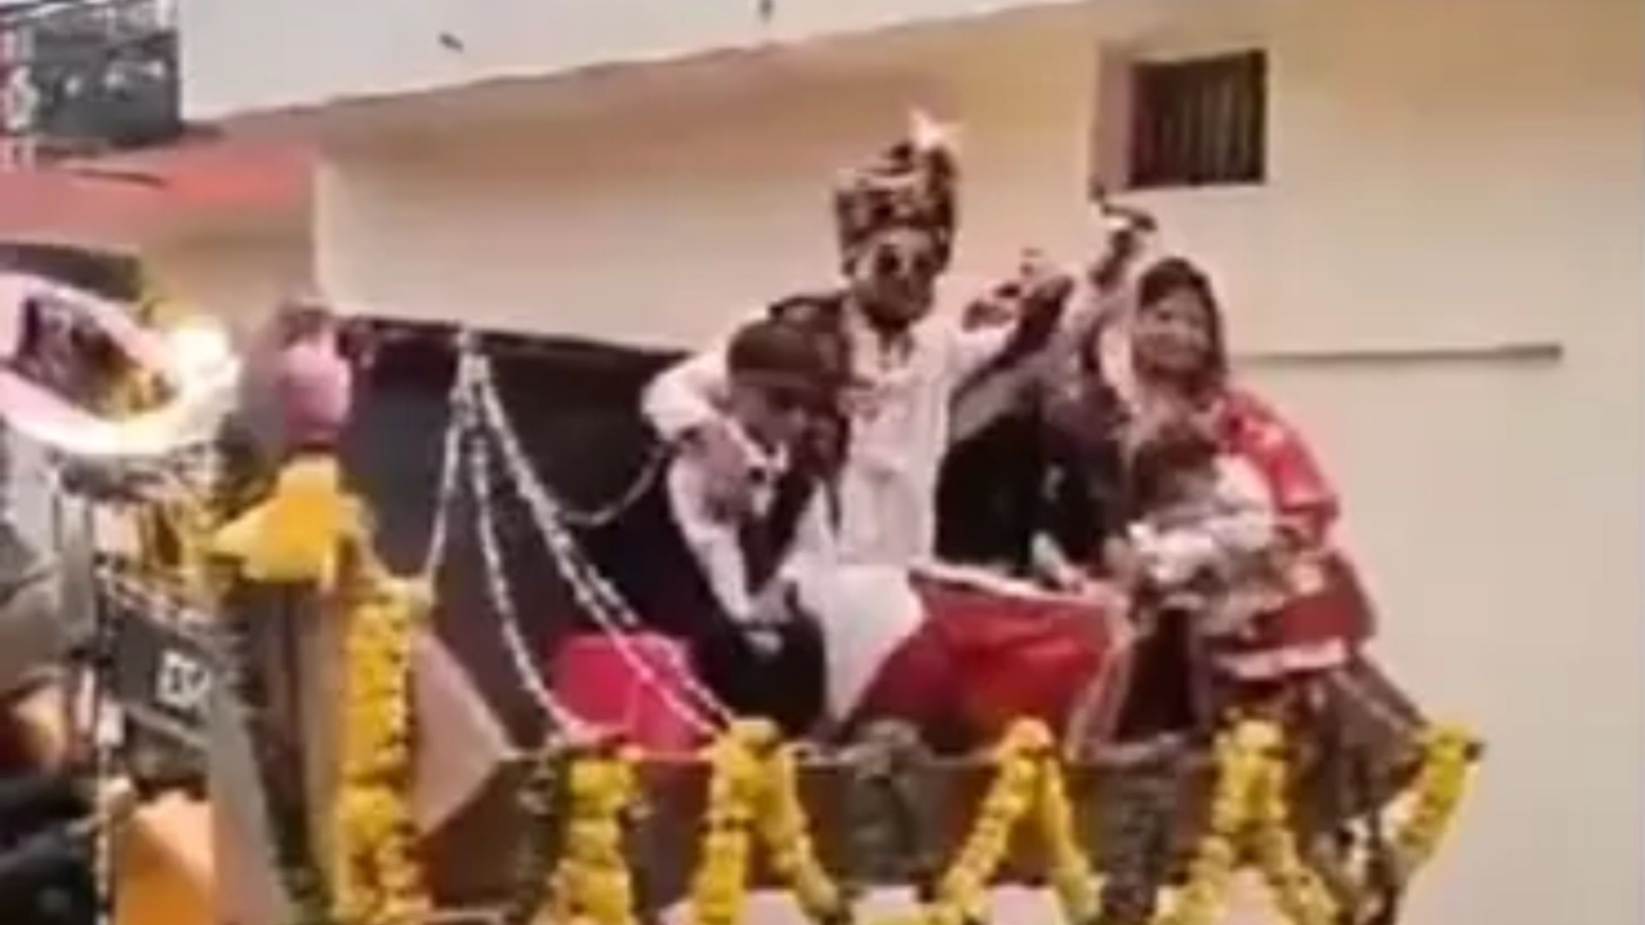 Groom’s Bulldozer Wedding Entry in Gorakhpur Goes Viral, Sparks Mixed Reactions